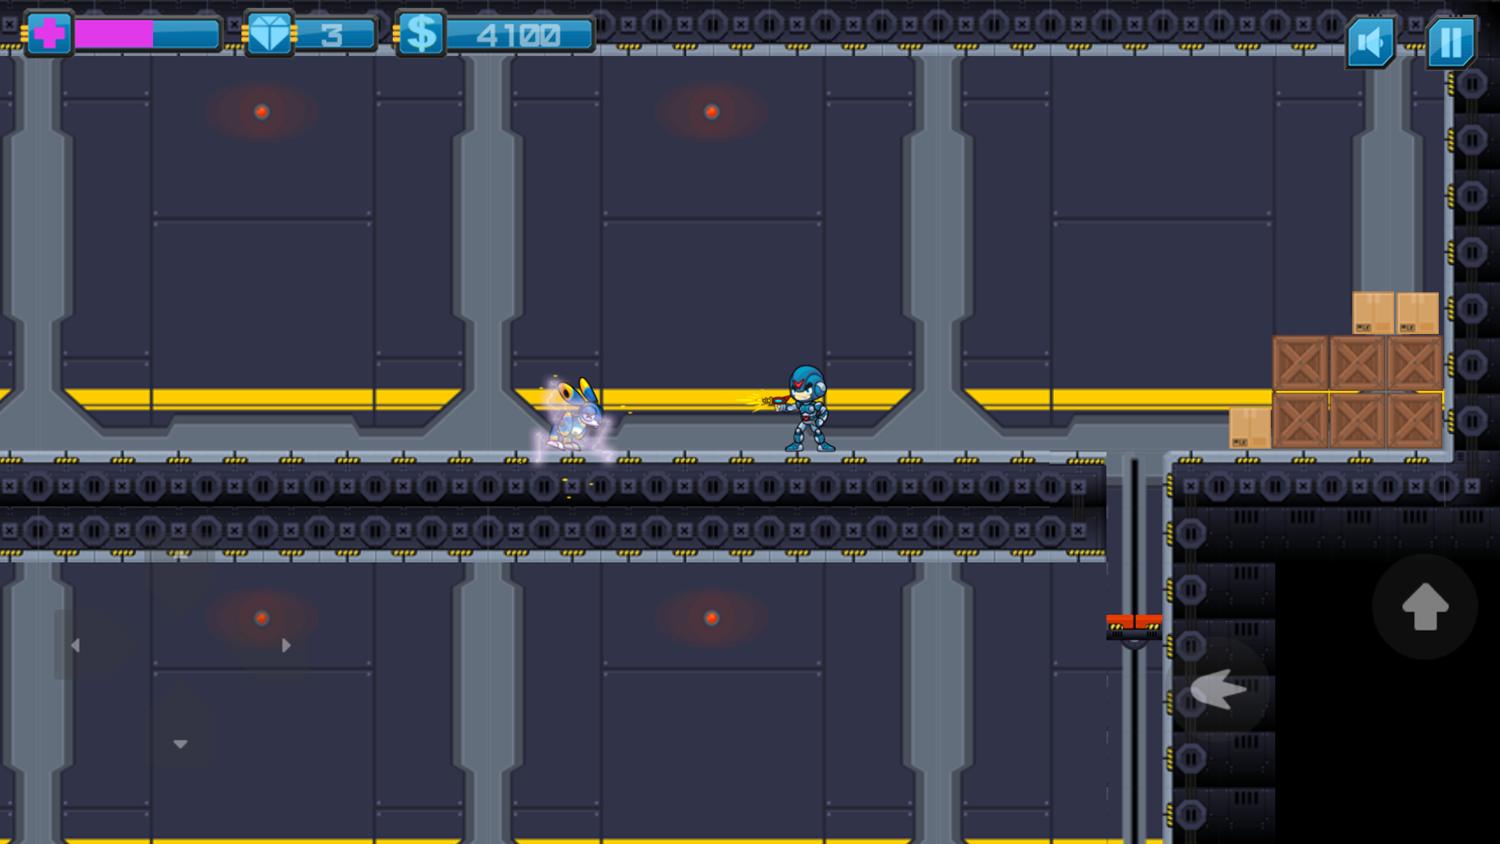 Blastman Game Level Progress Screenshot.